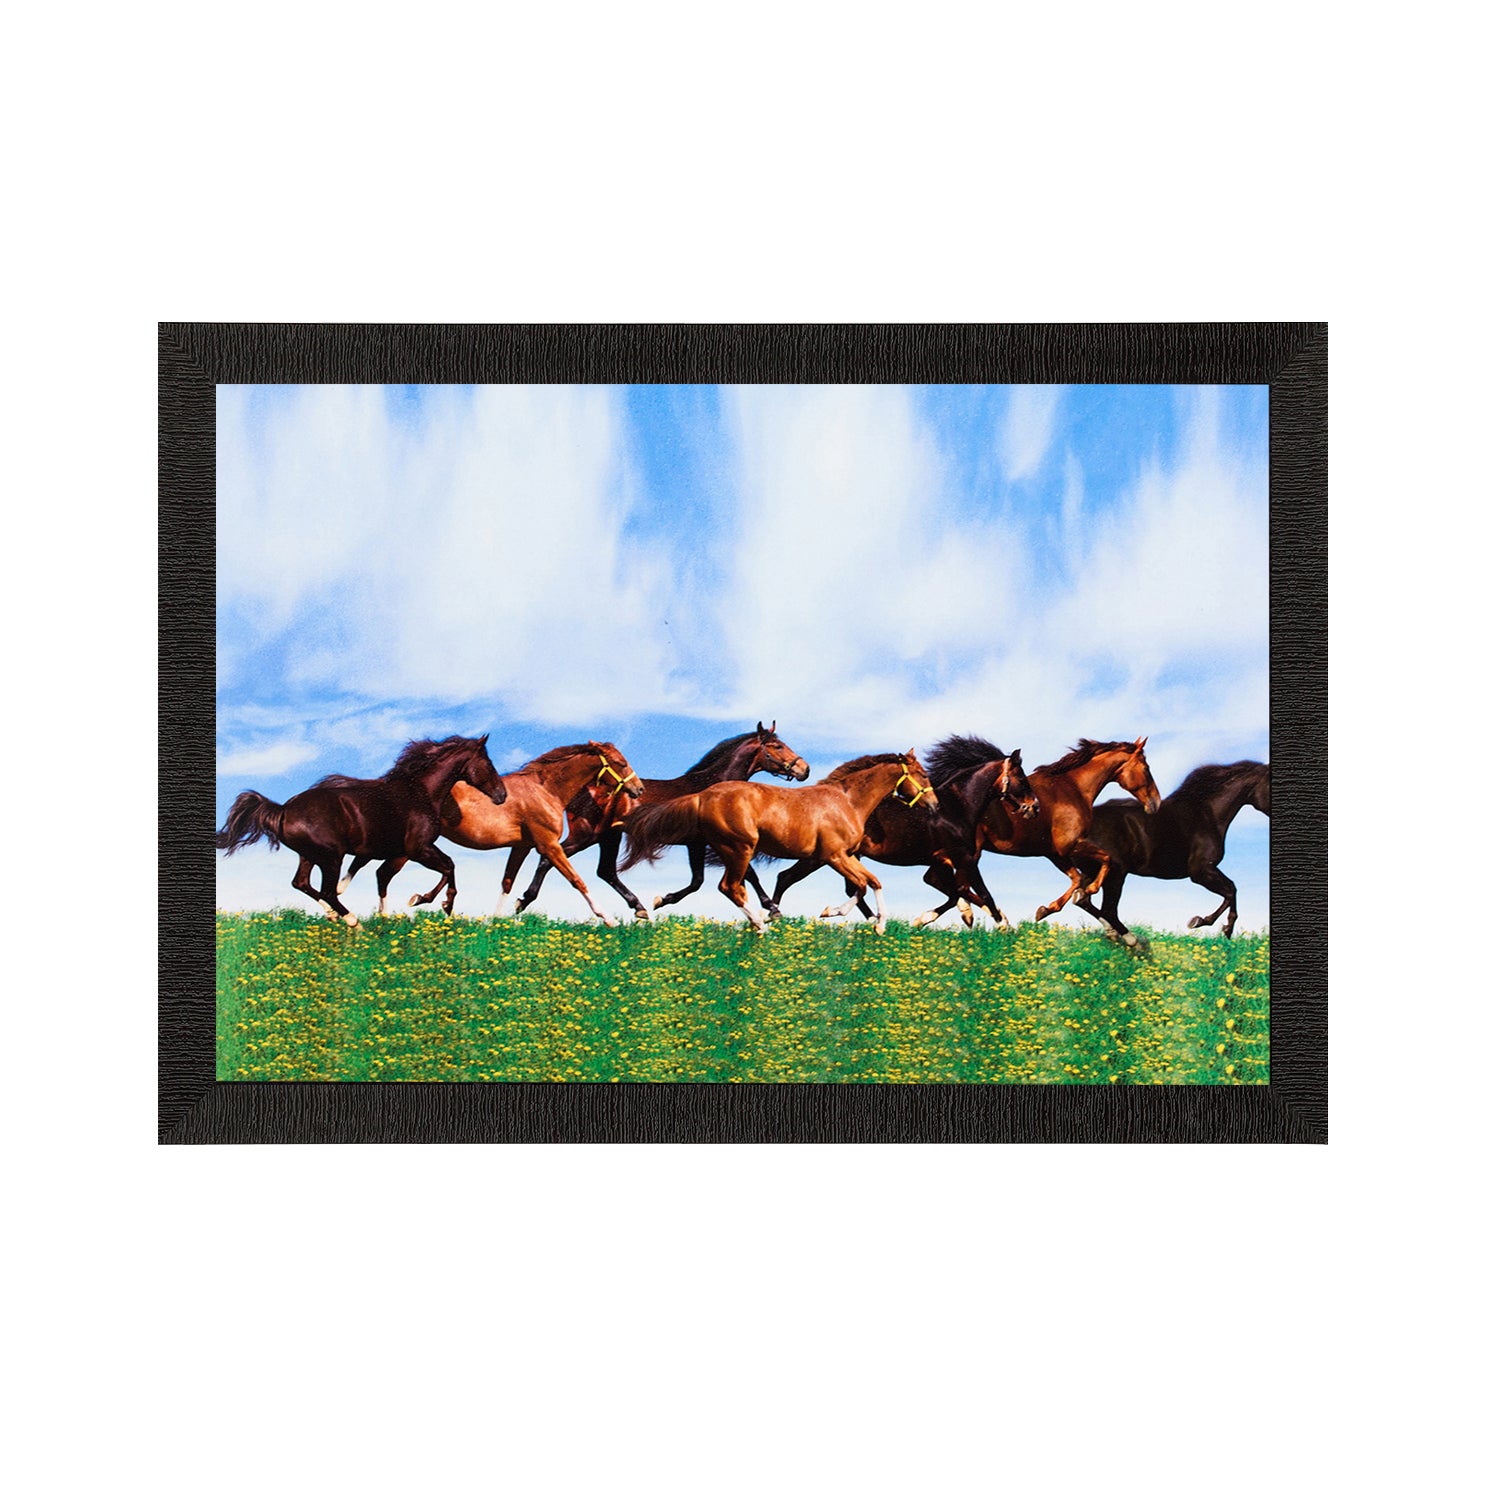 7 Running Horses Painting Digital Printed Animal Wall Art